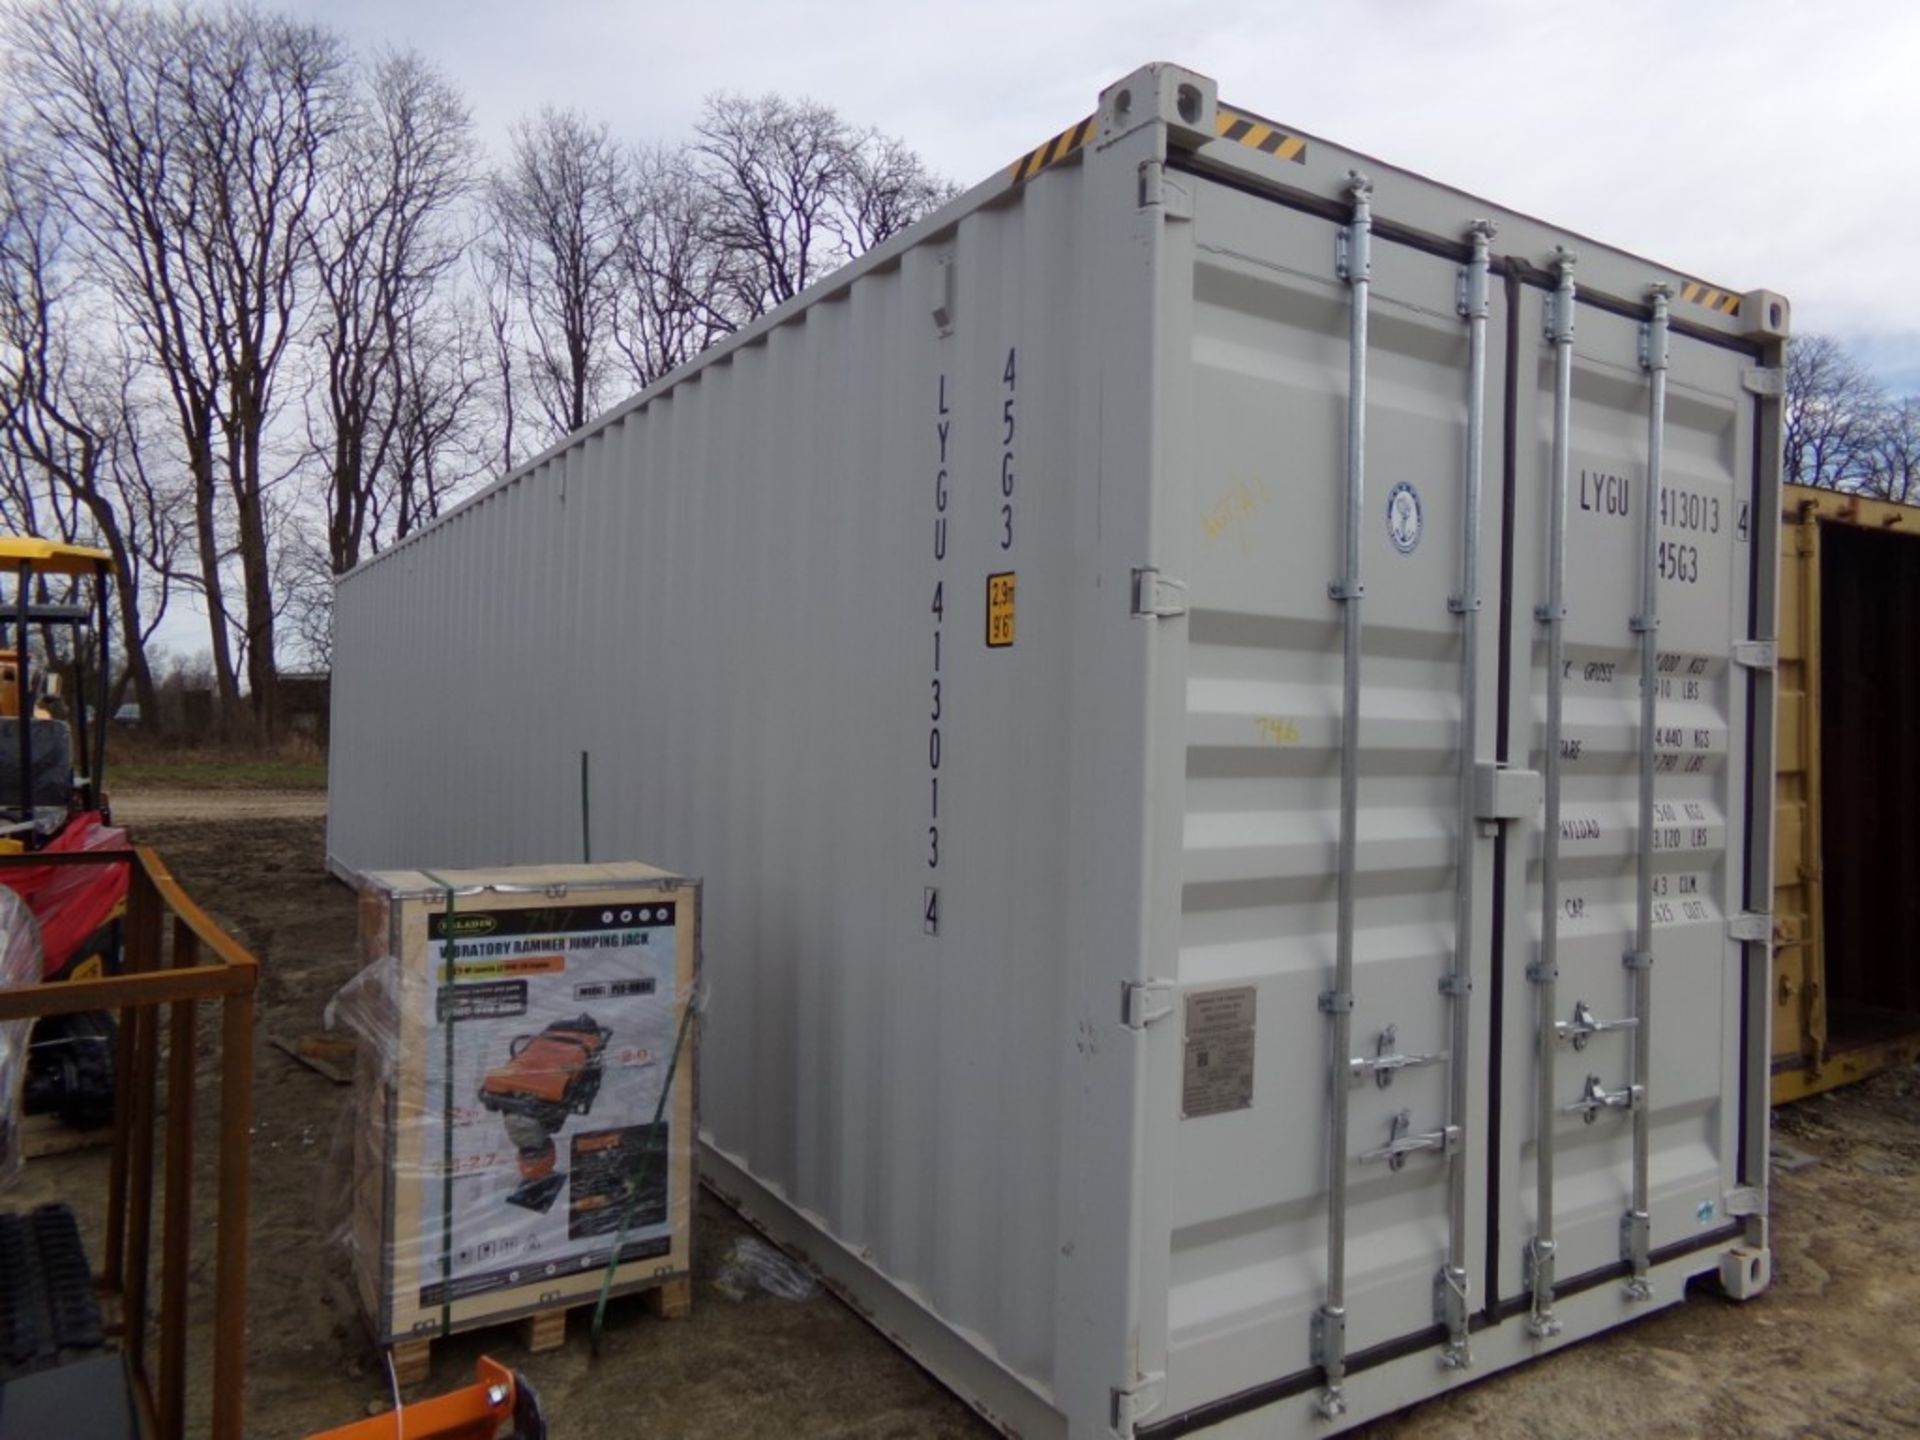 New 40' Off White Storage Container with Barn Doors in 1 End, Cont. # LYGU4130134 - Bild 3 aus 5